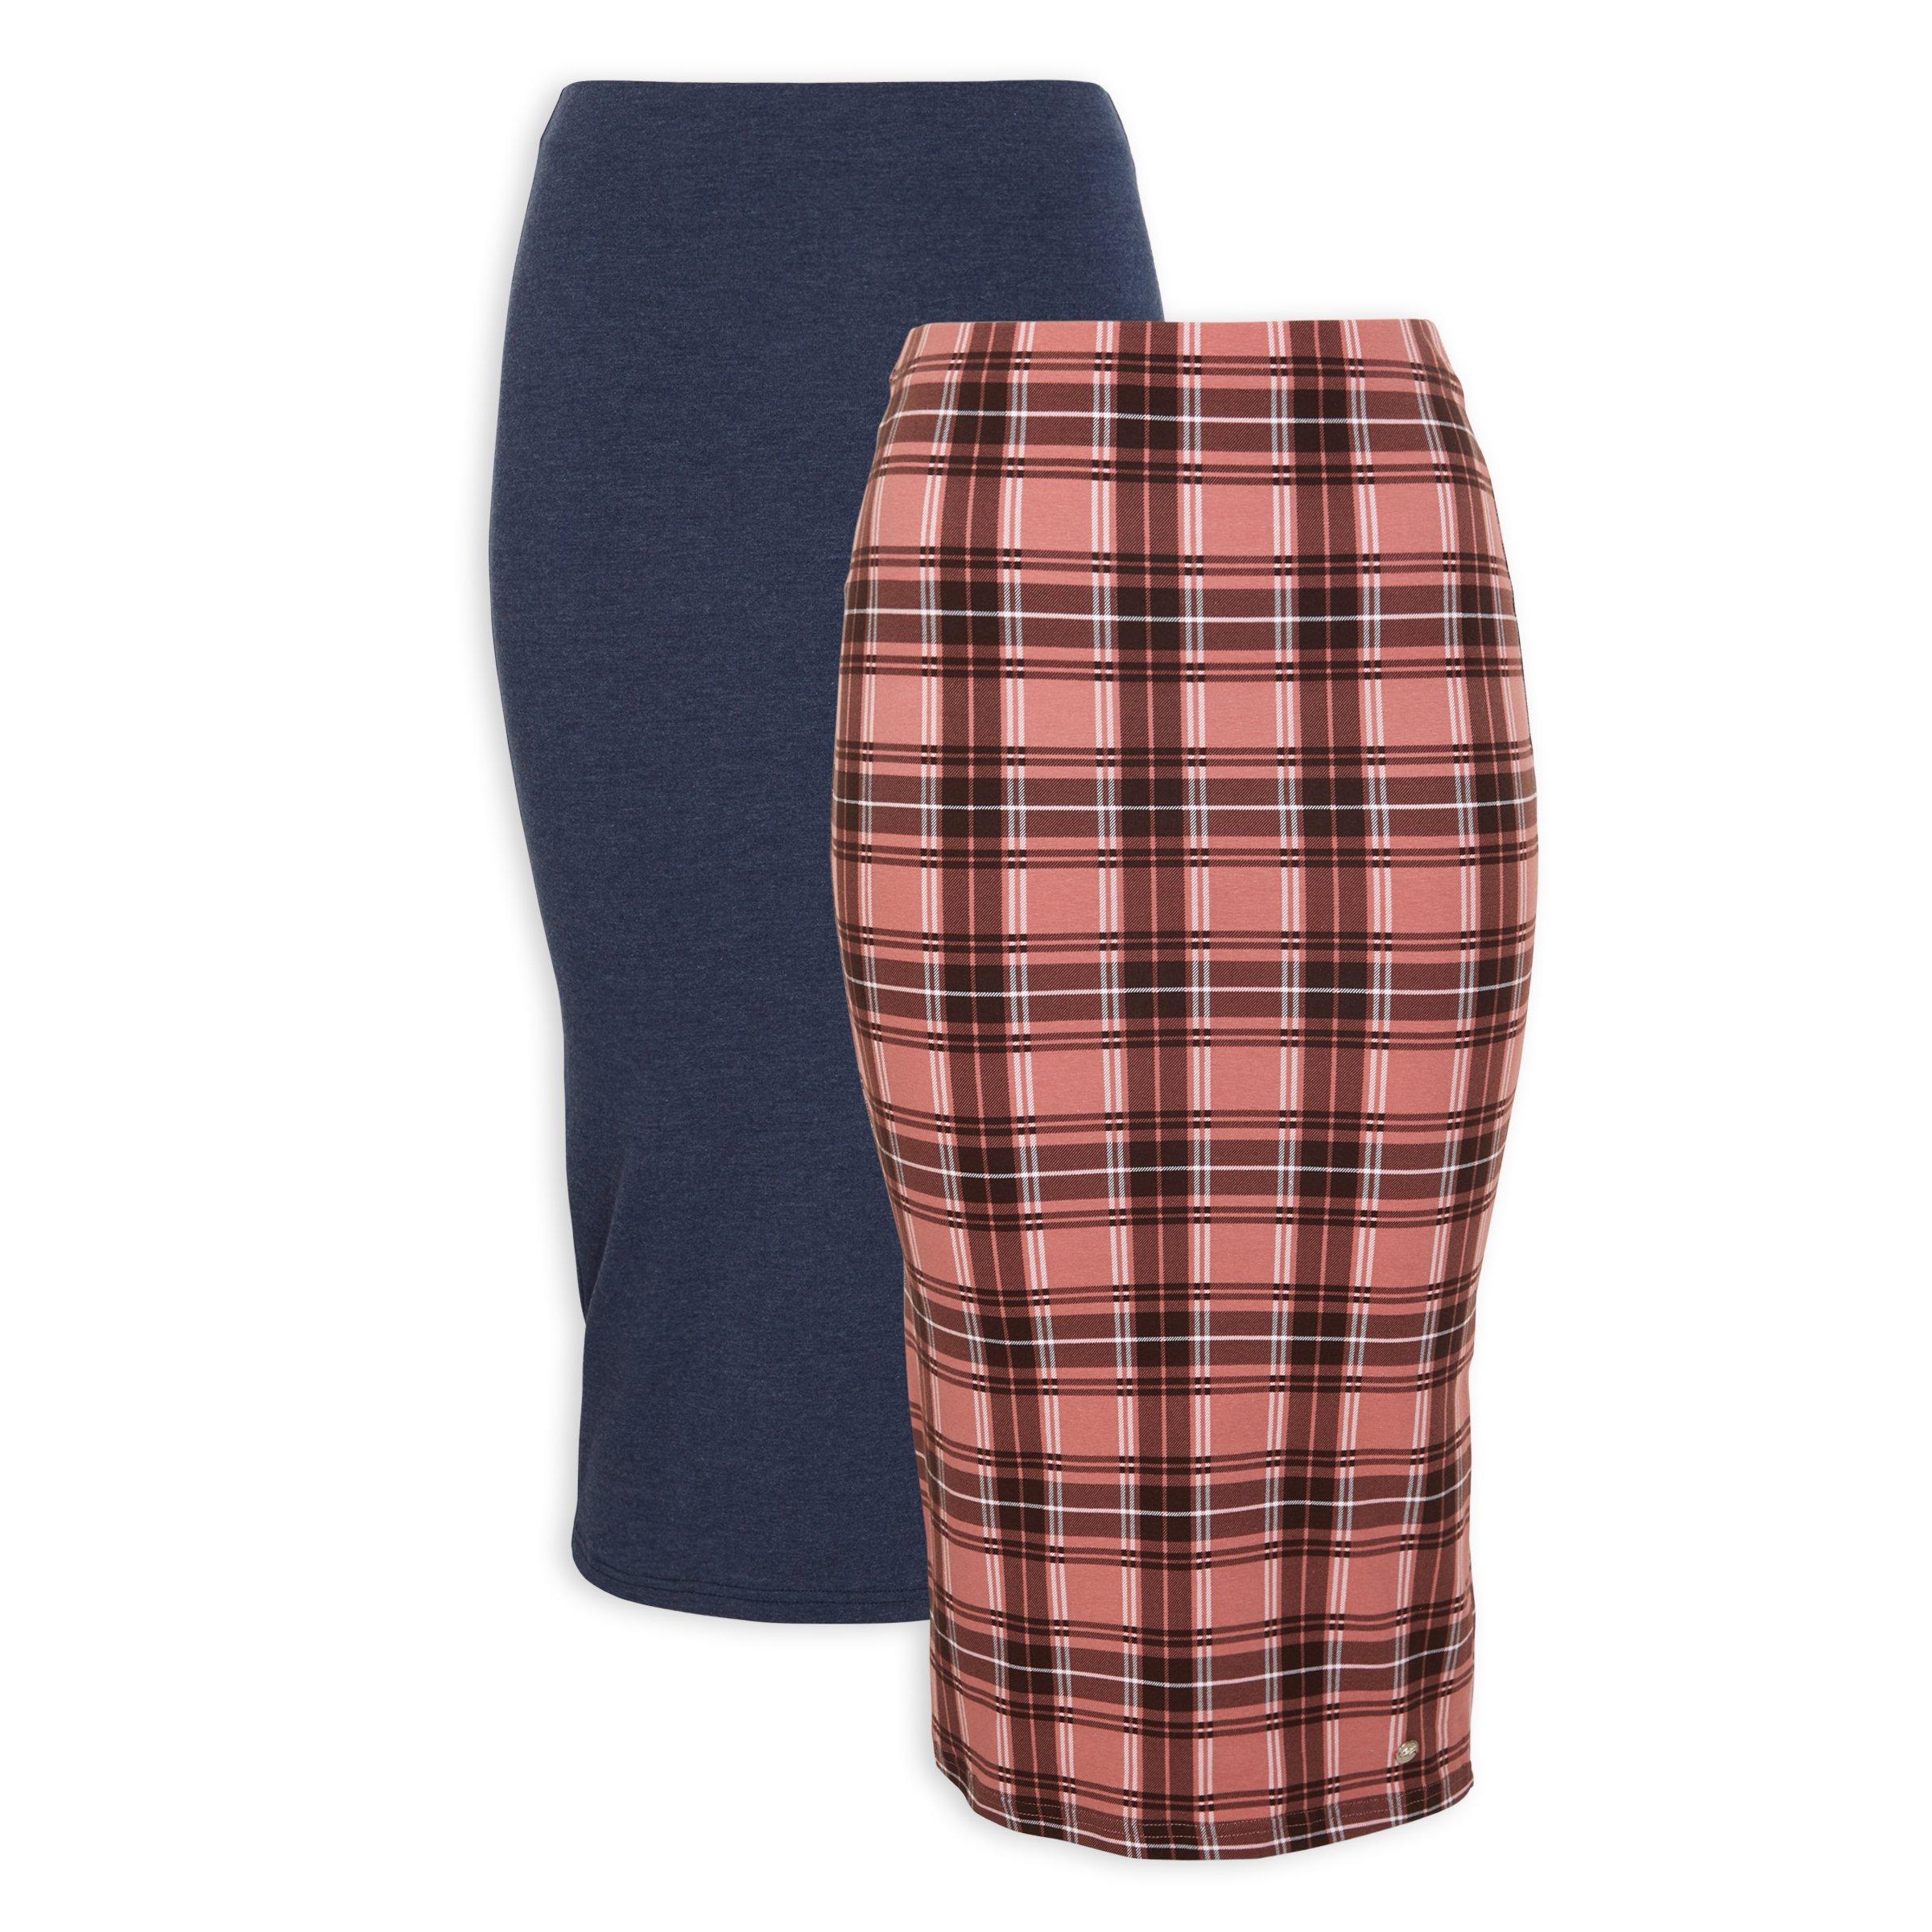 Truworths | Buy Ladies Summer Skirts